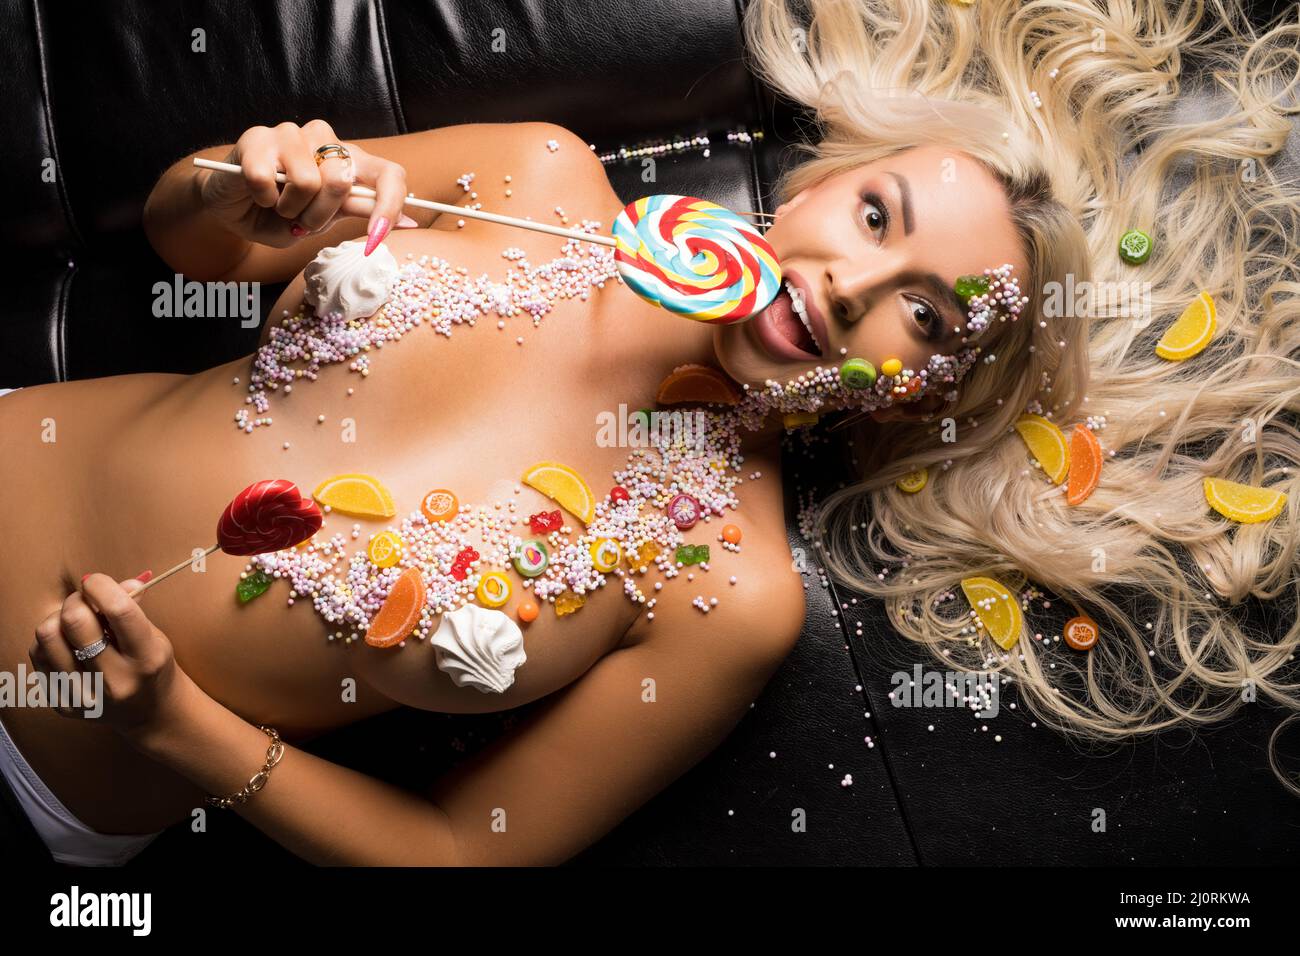 Nude woman licking lollipop on black sofa Stock Photo